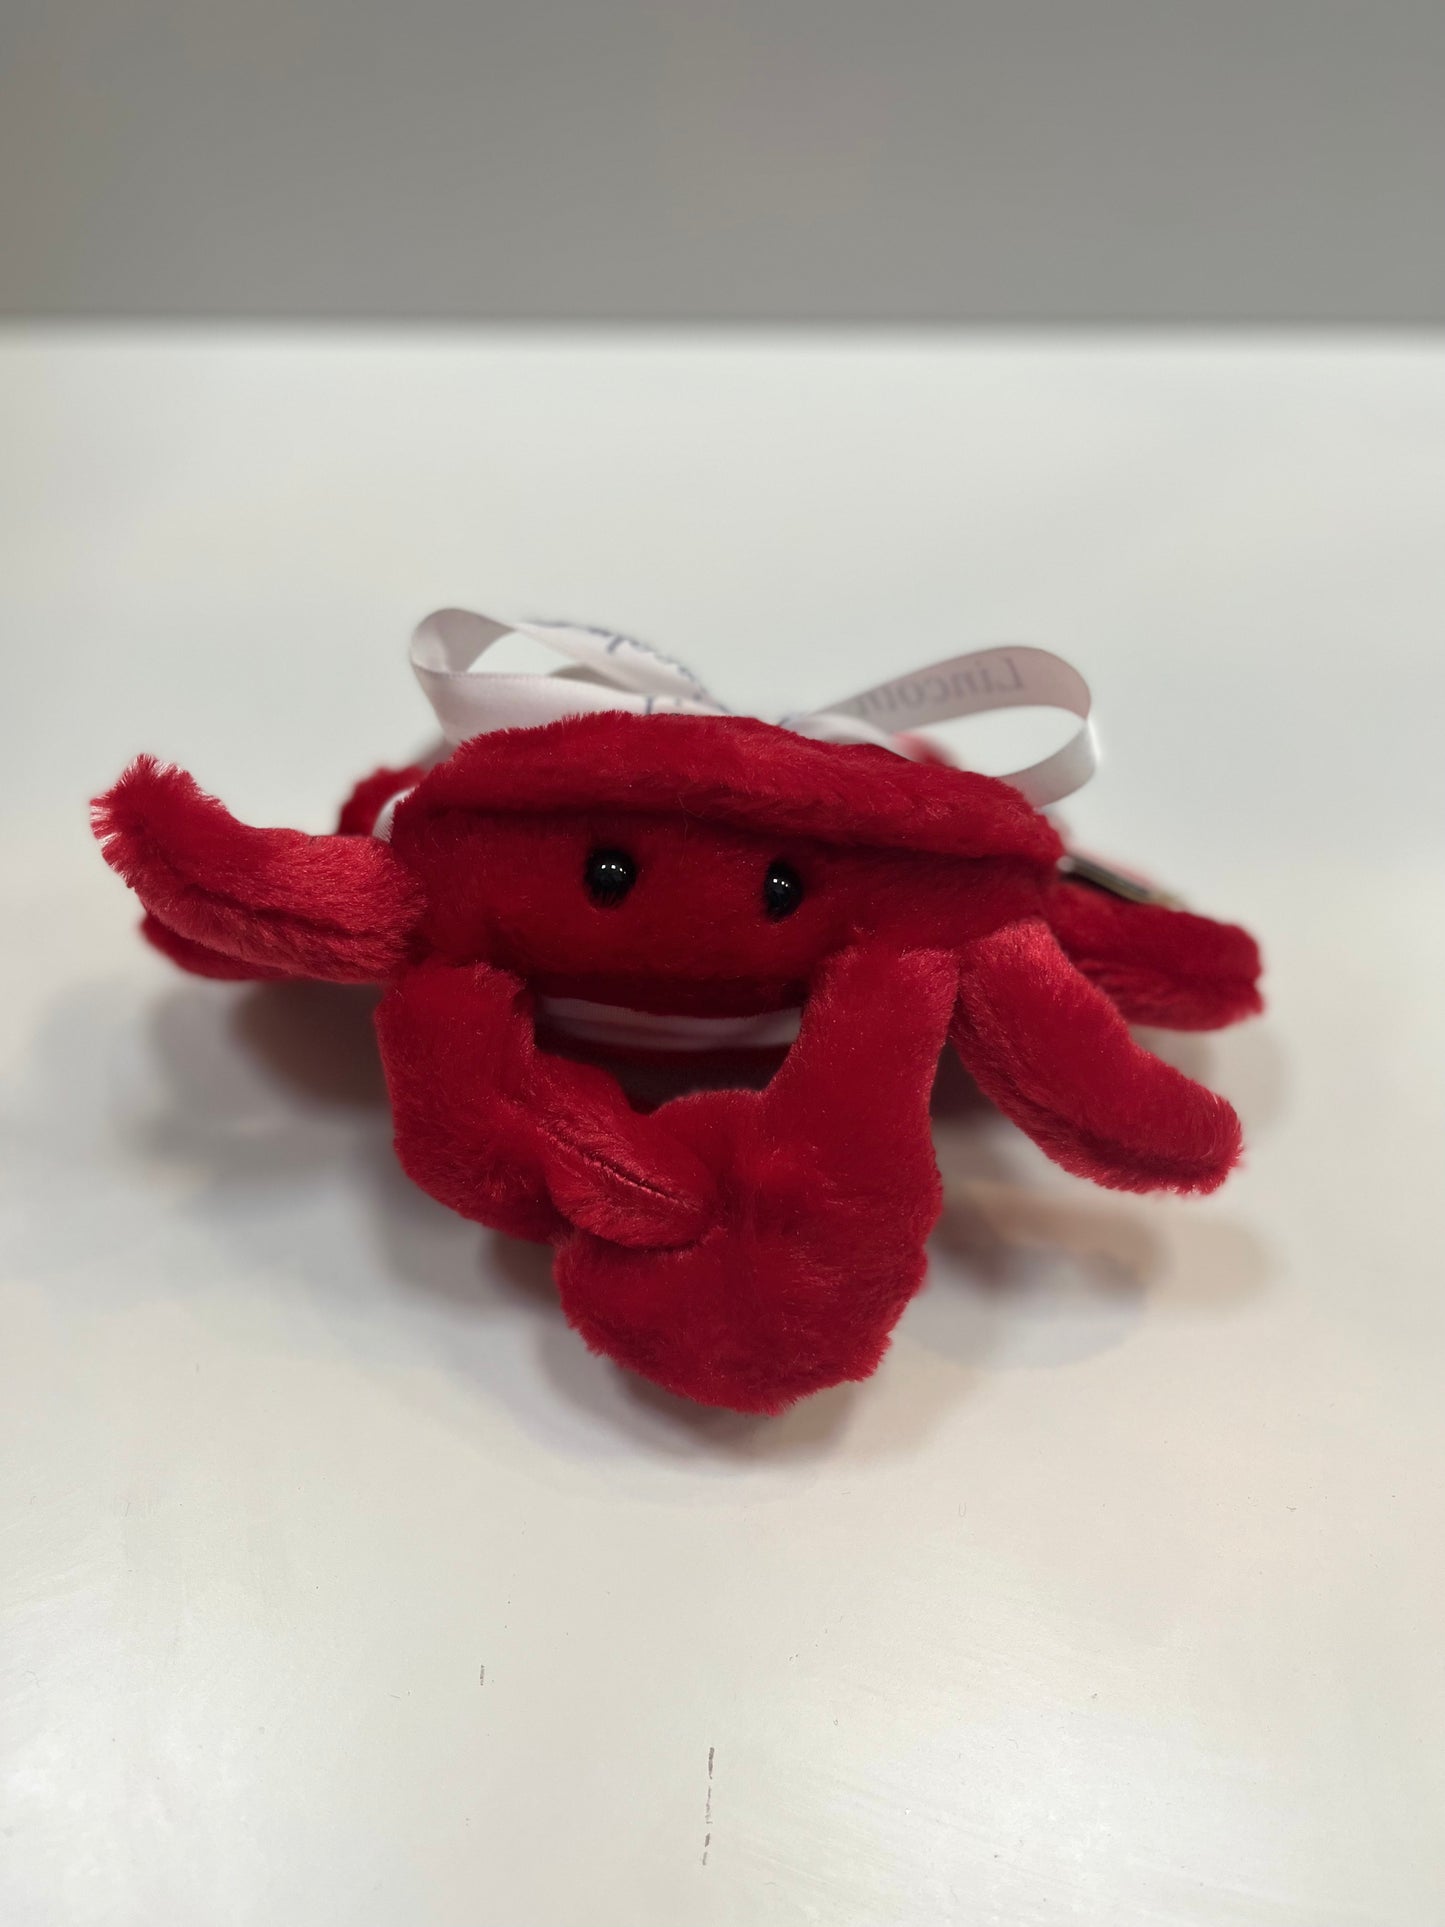 Clearance Stuffed Animal - 8" Crab